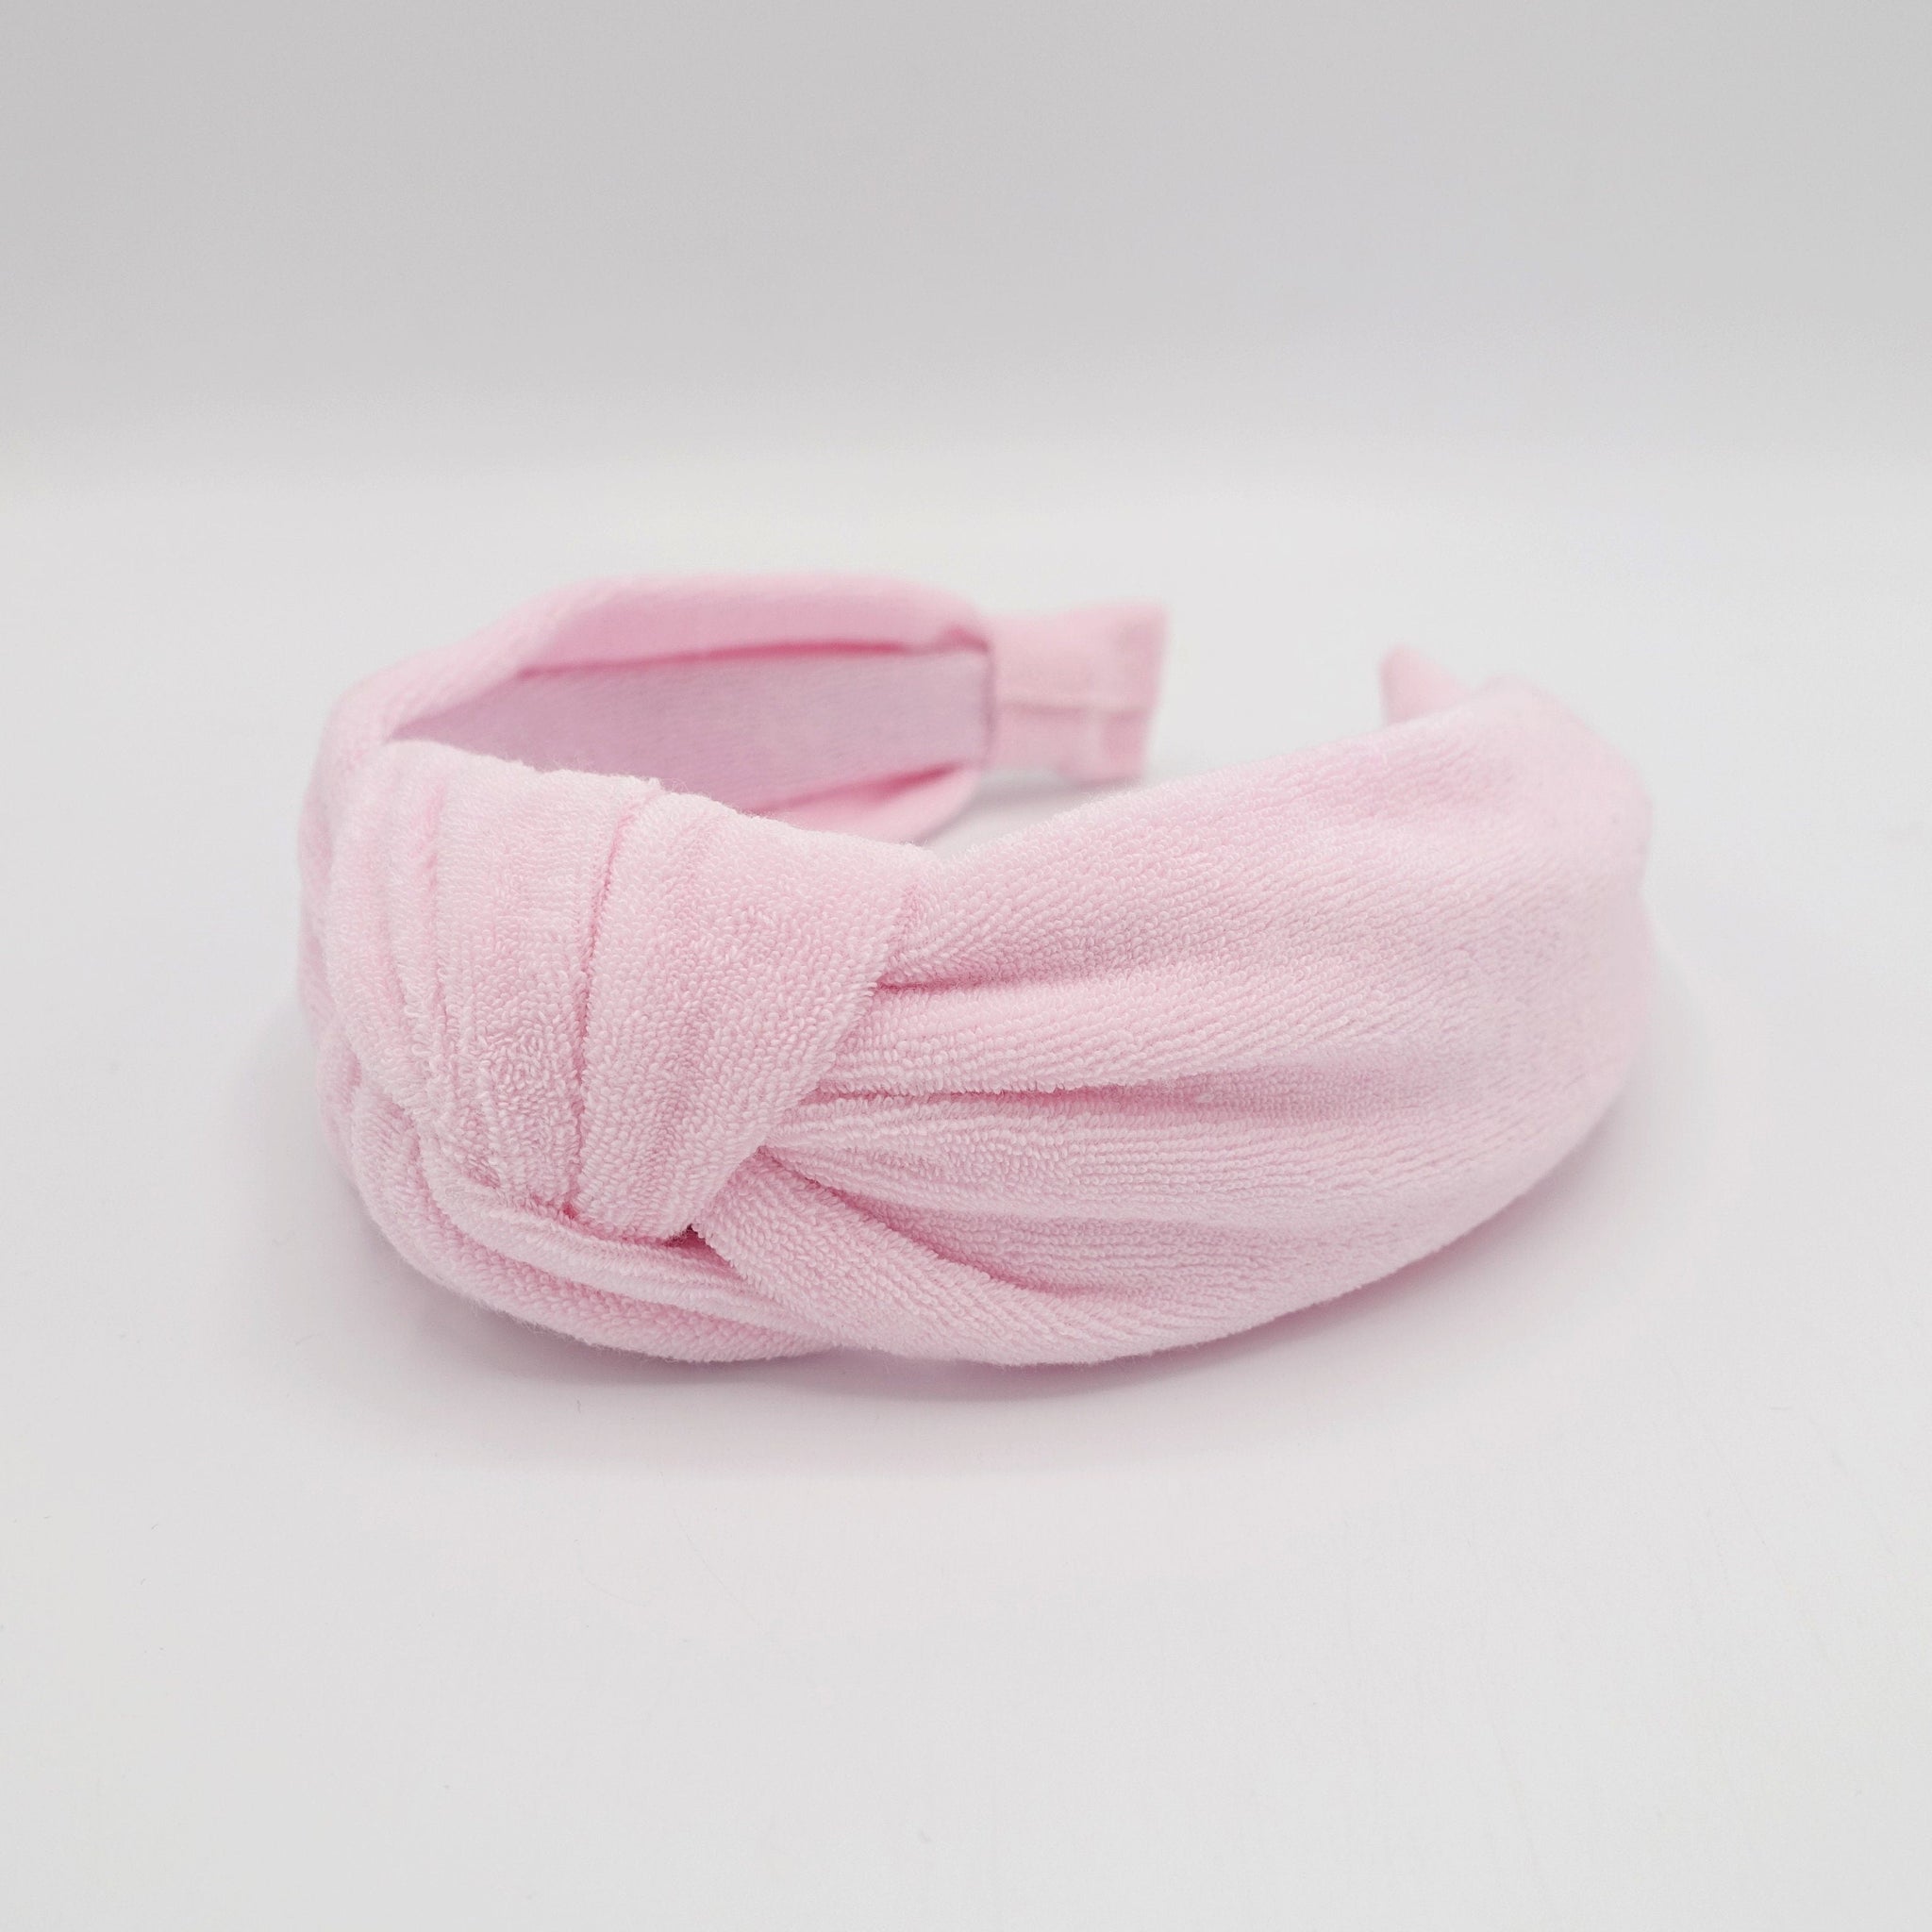 veryshine.com Headbands Baby pink terry cloth top knot headband cozy fashion hairband for women